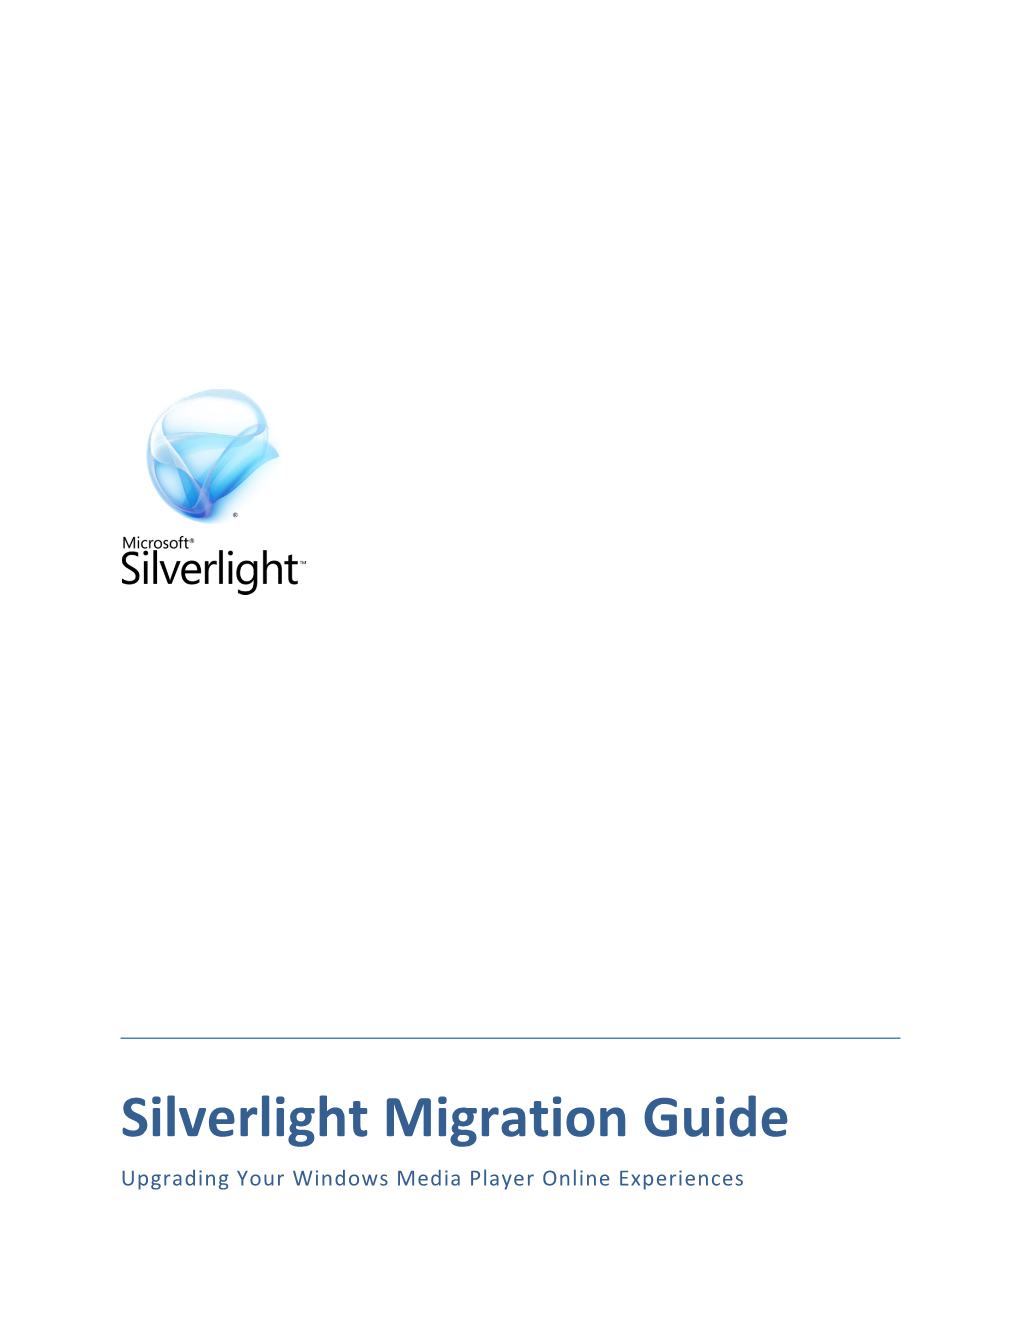 Microsoft Silverlight 2 Beta Reviewers Guide